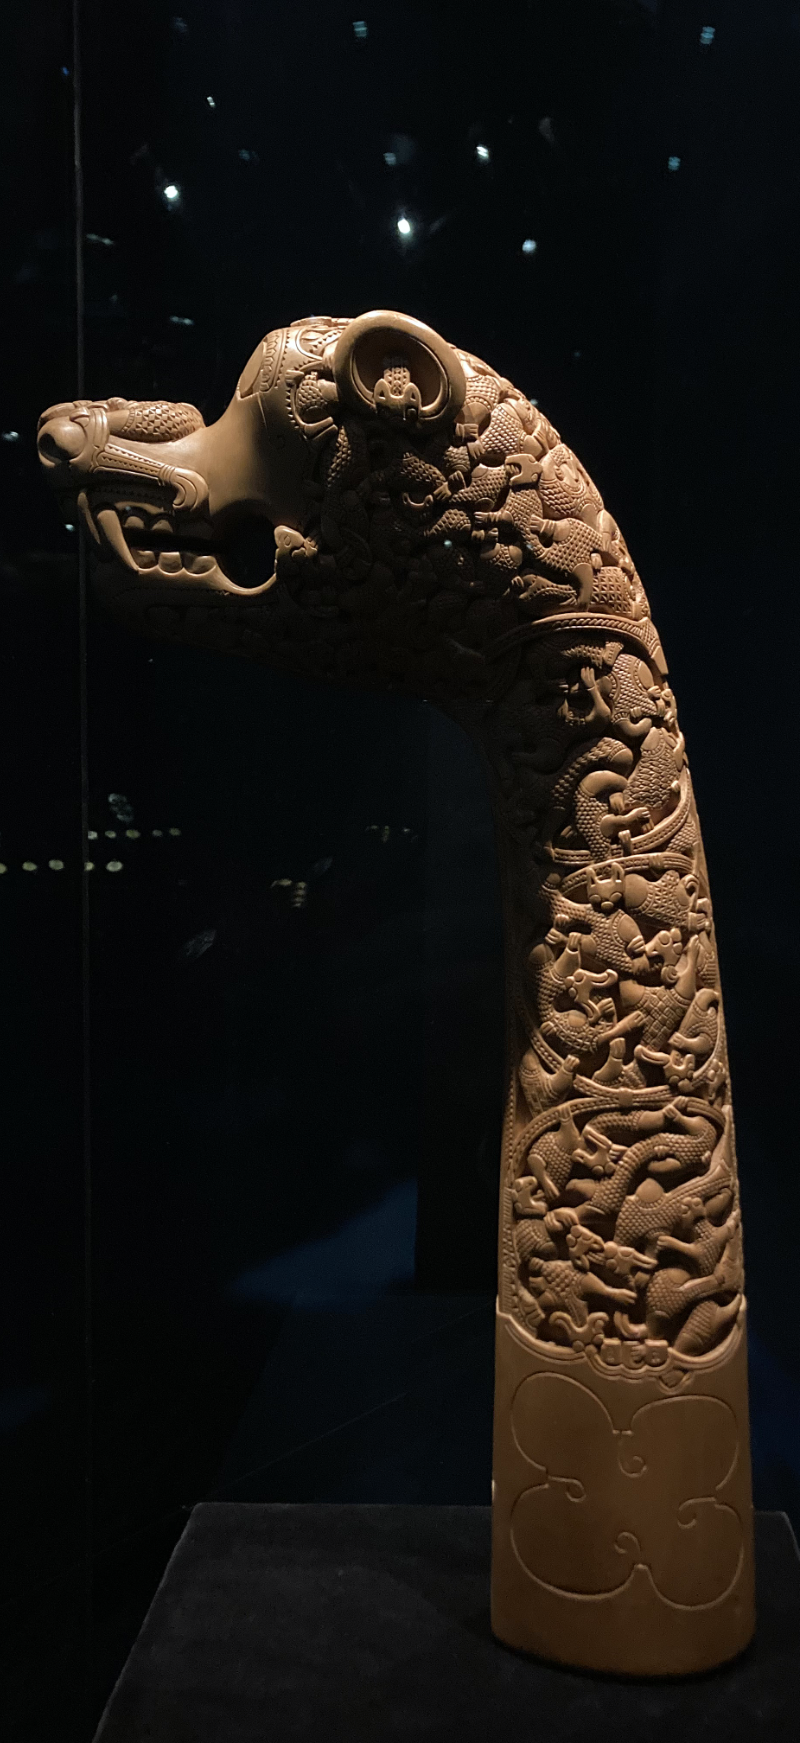 Drachenkopf, Exponat aus dem Historisk Museum Oslo